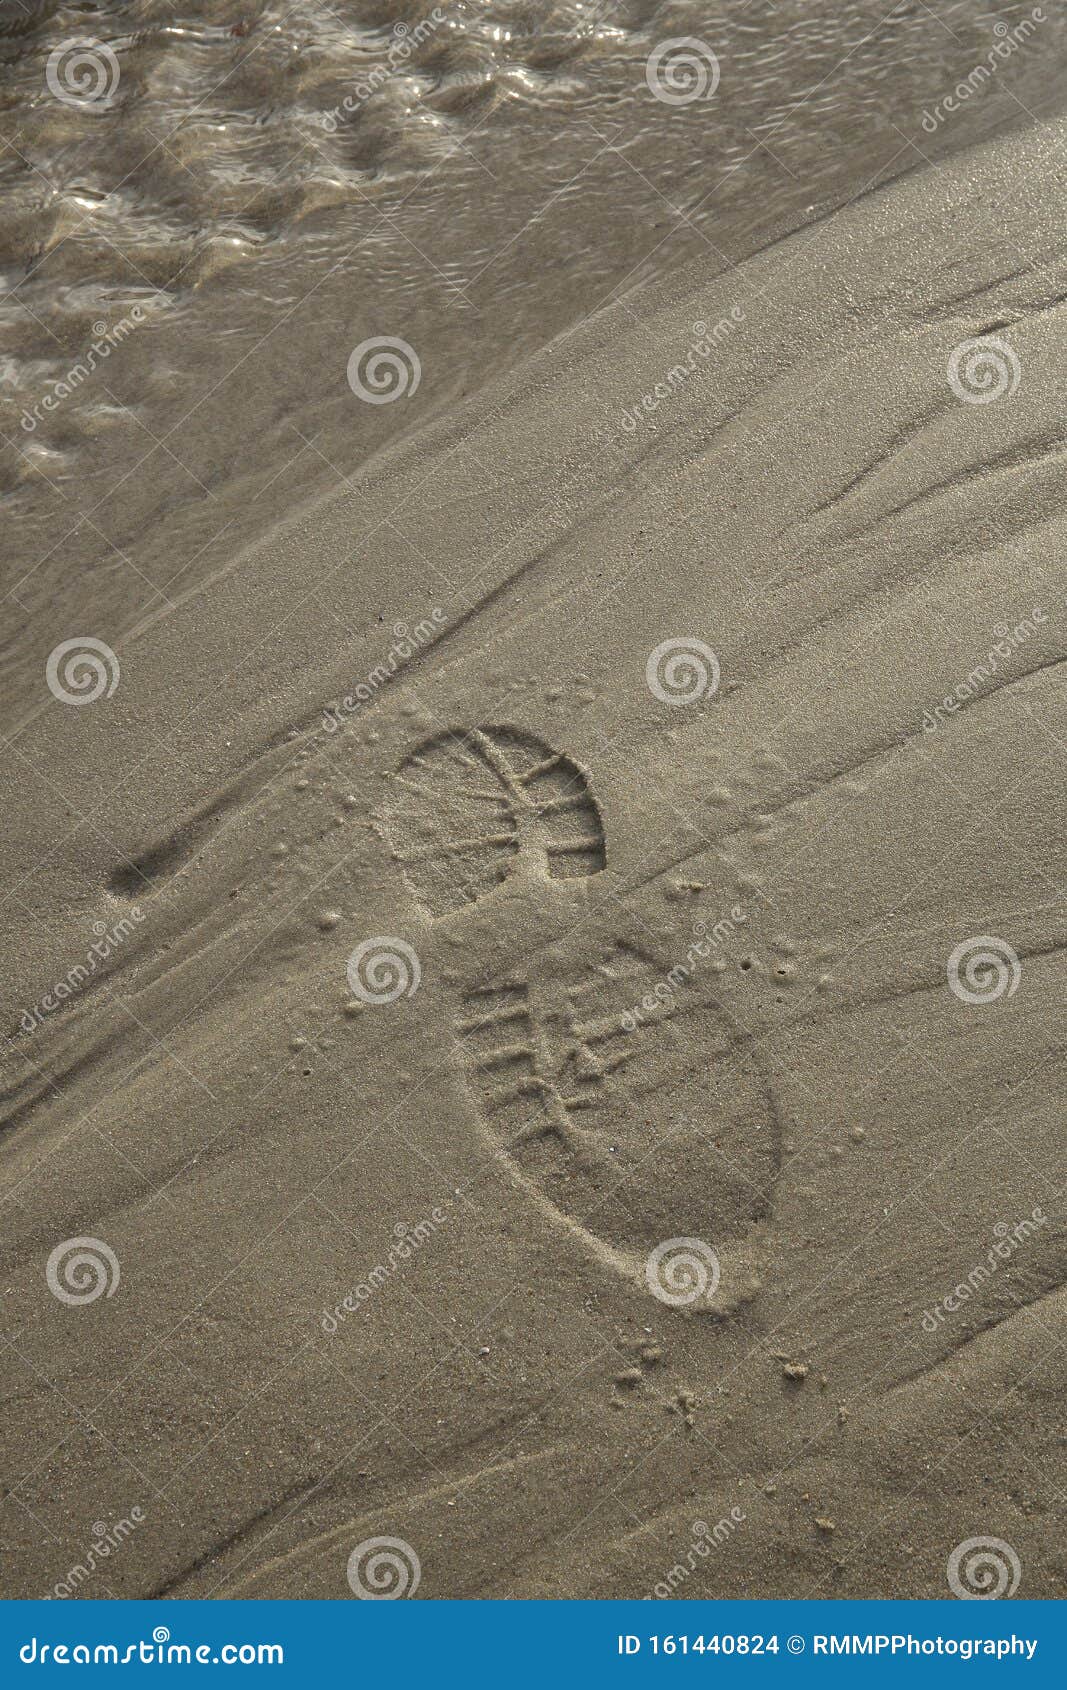 Reflection On The Human Footprint